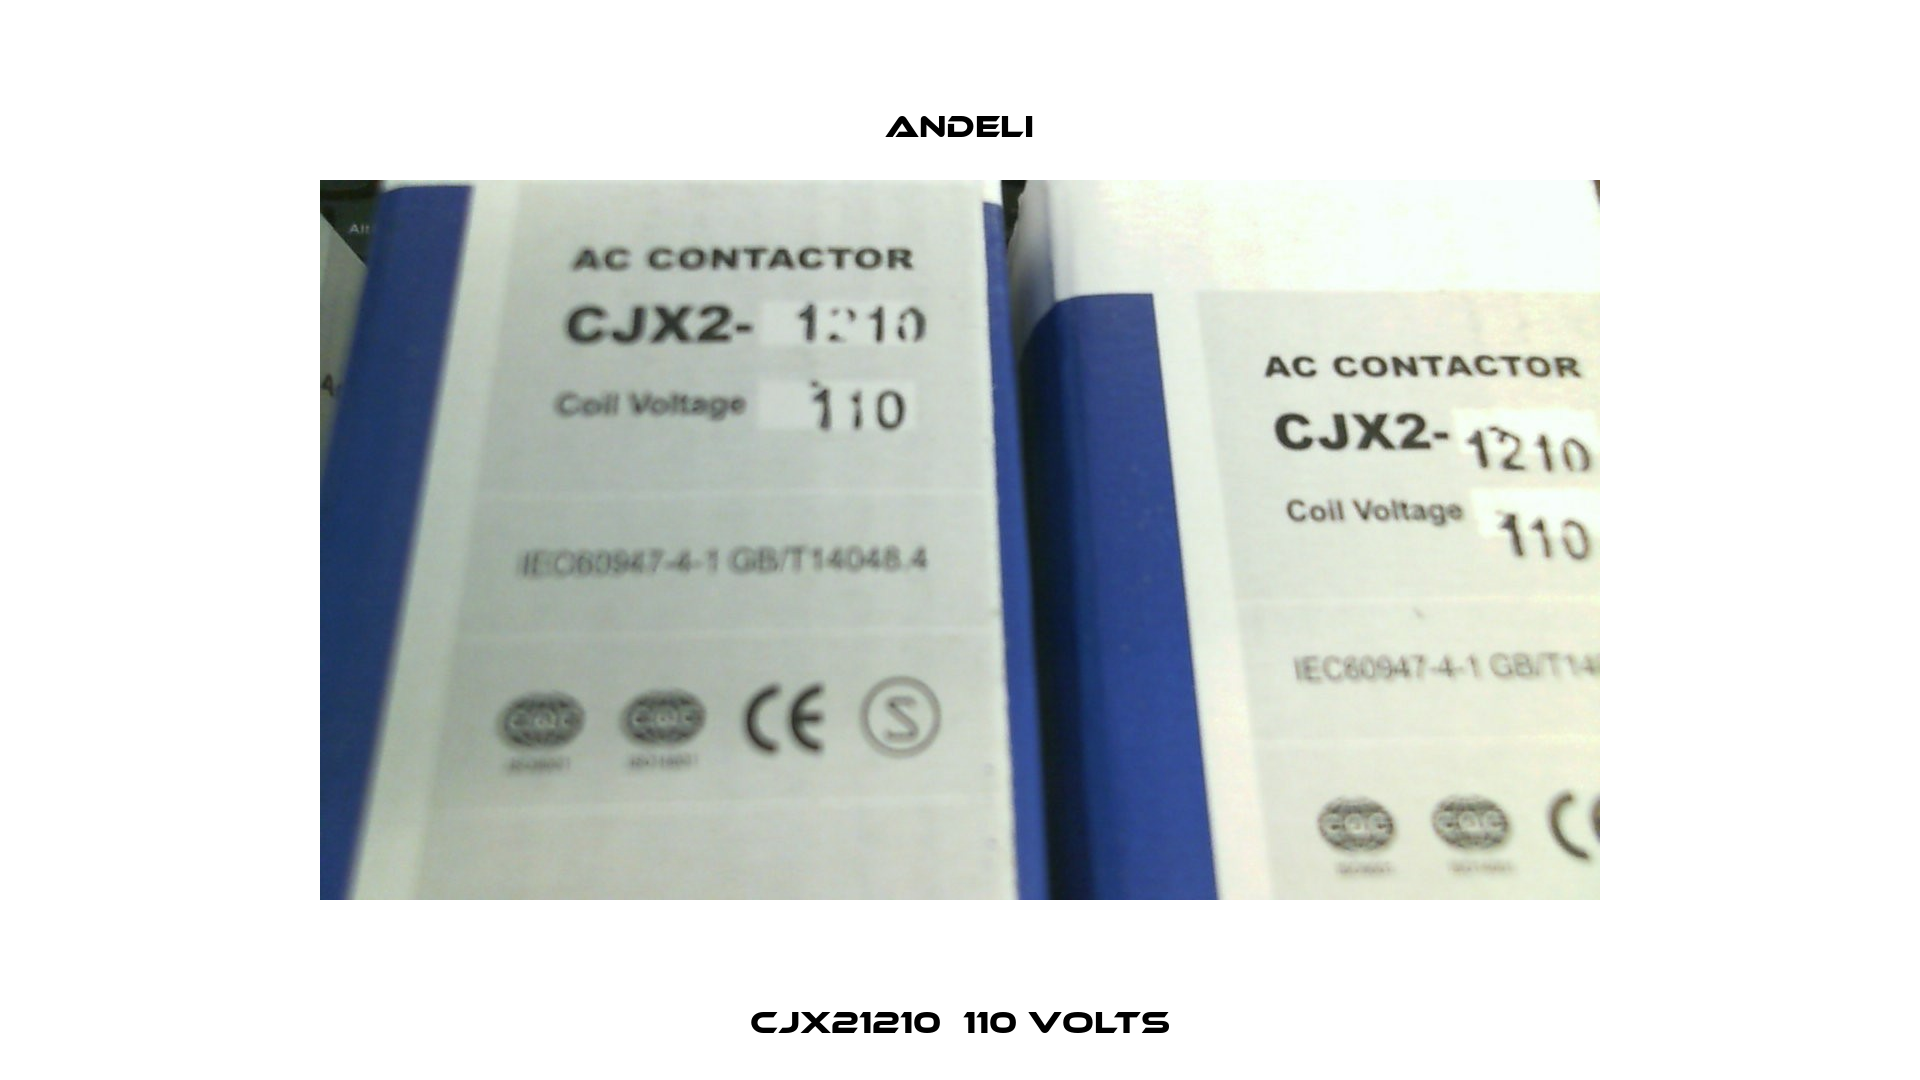 CJX21210  110 volts Andeli